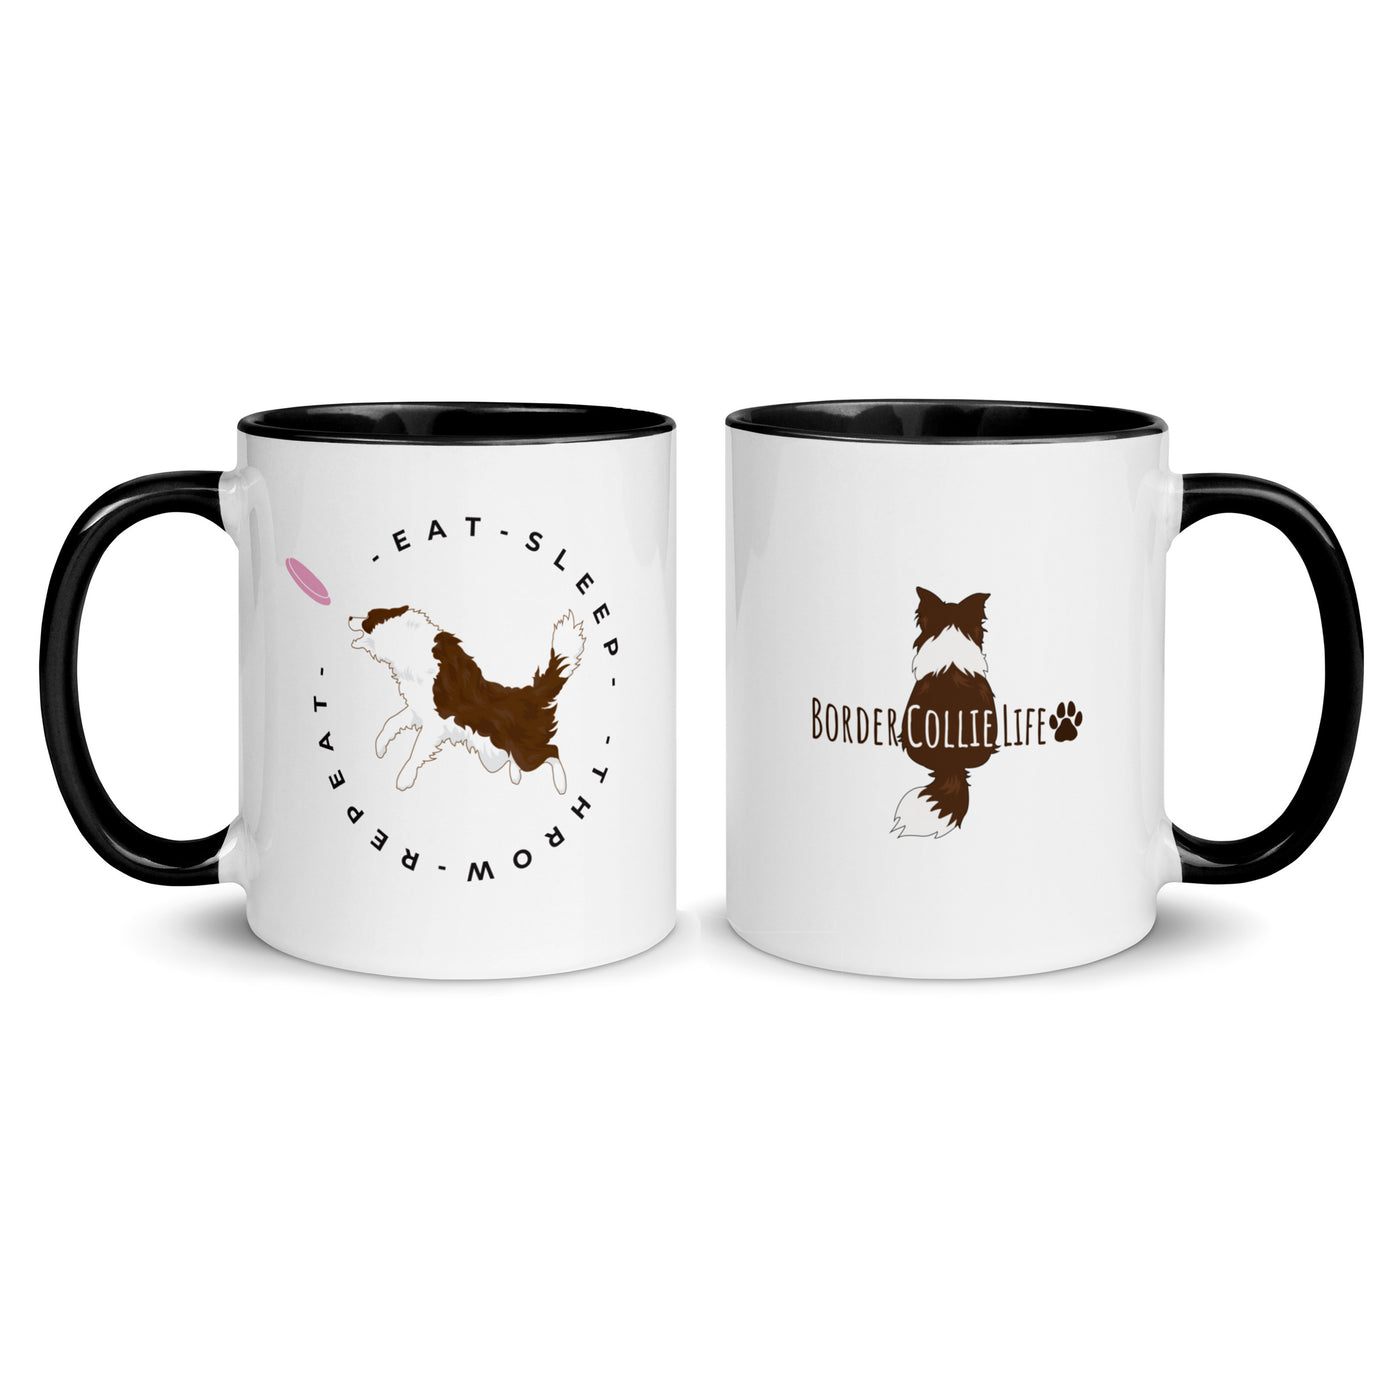 brown border collie mugborder collie mug | Eat sleep throw repeat border collie mug | disc dog coffee mug | Agility dog border collie | frisbee dog border collie